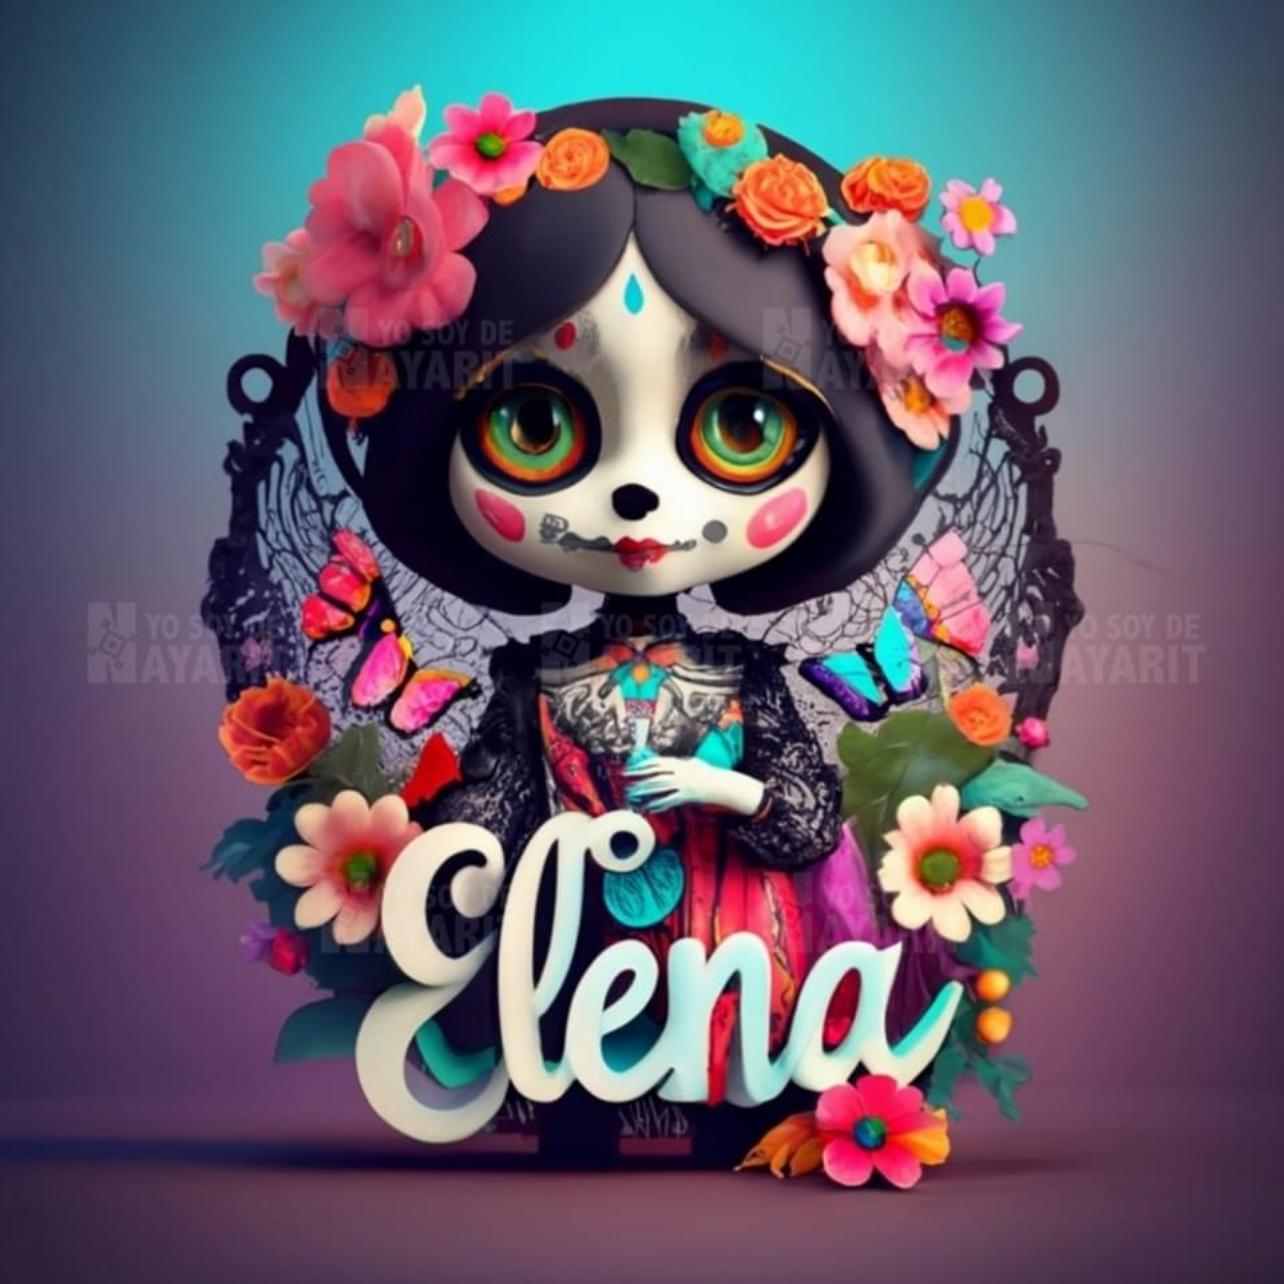 Elena's images